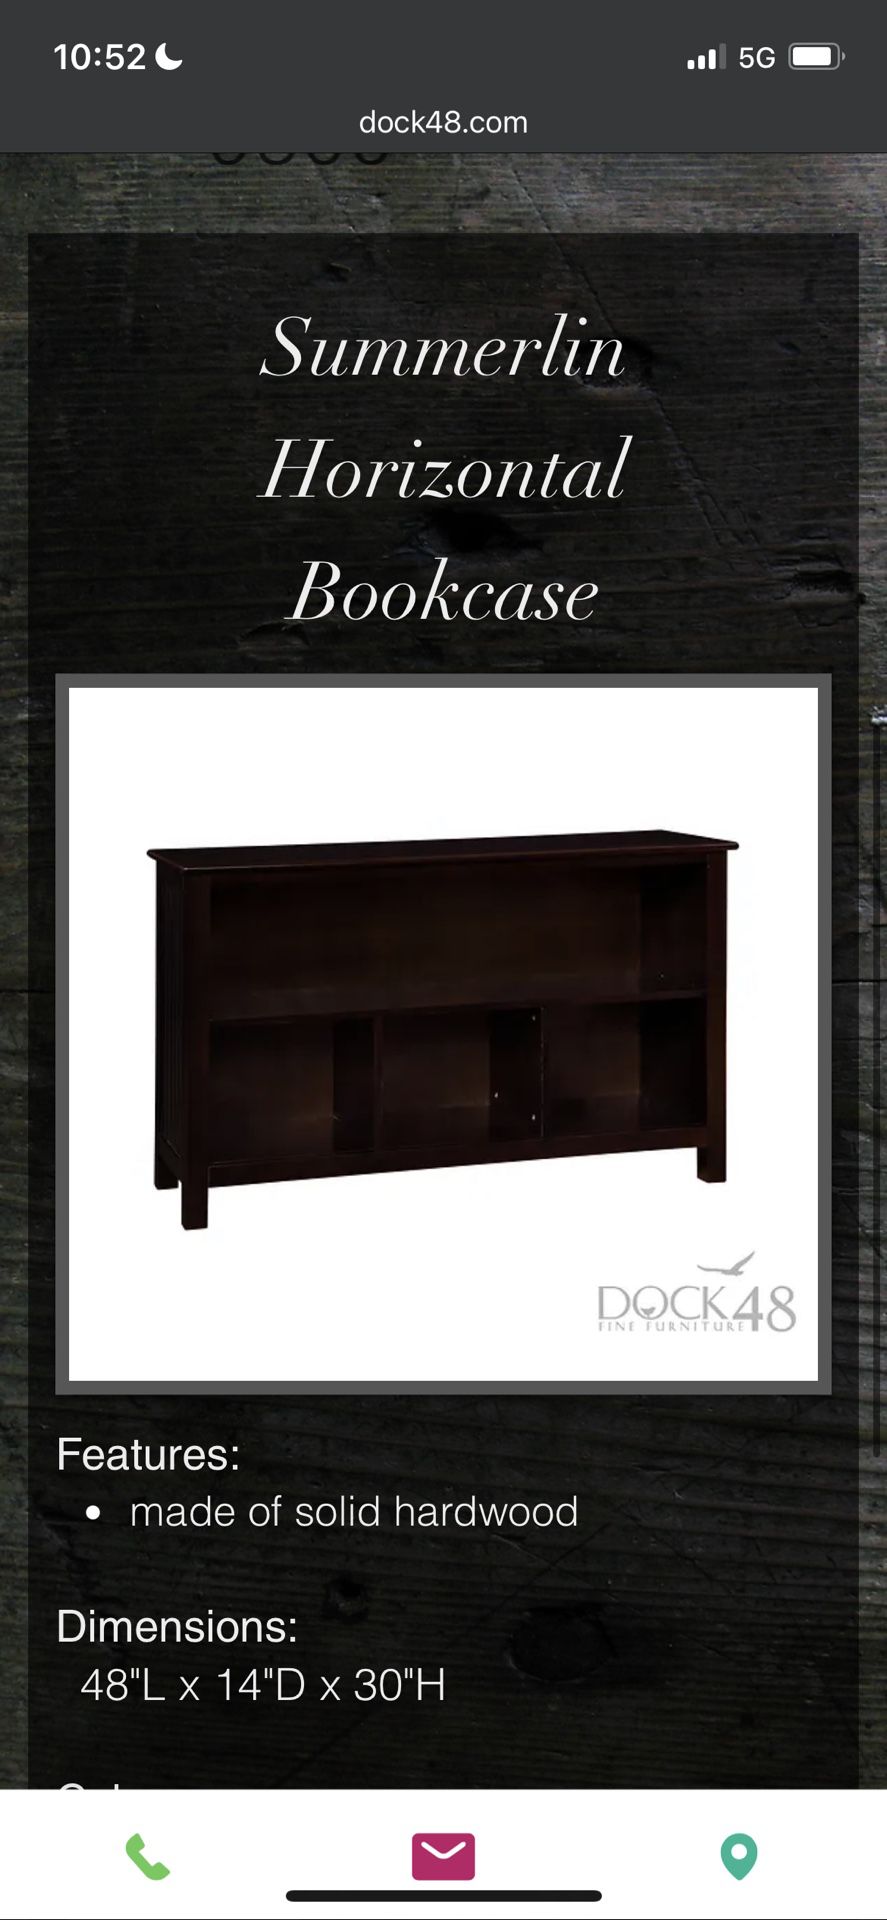 Summerlin Horizontal Bookcase